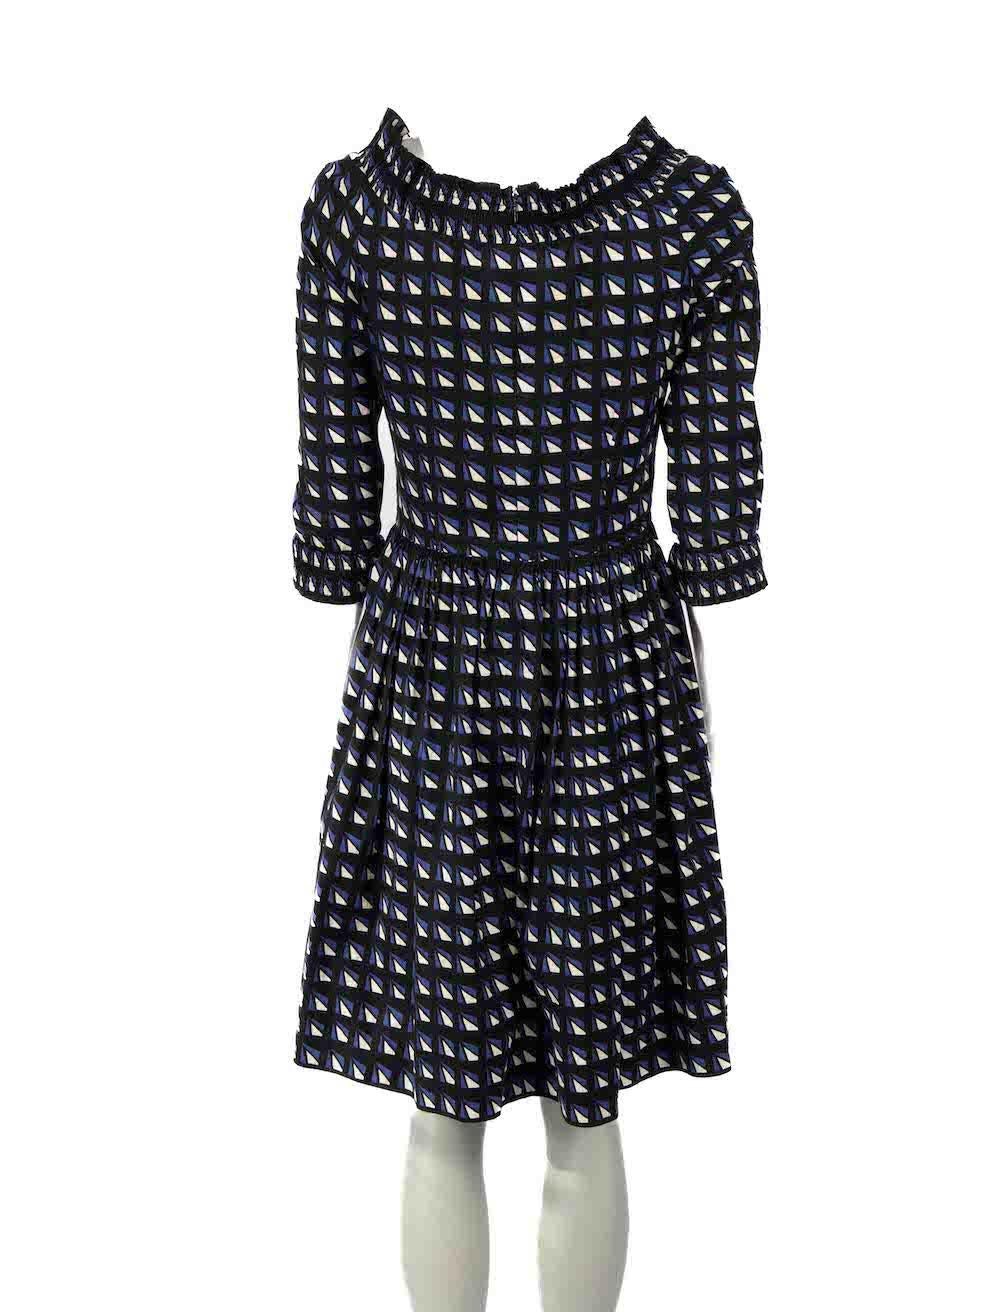 Prada Black Geometric Print Dress Size S In Good Condition For Sale In London, GB